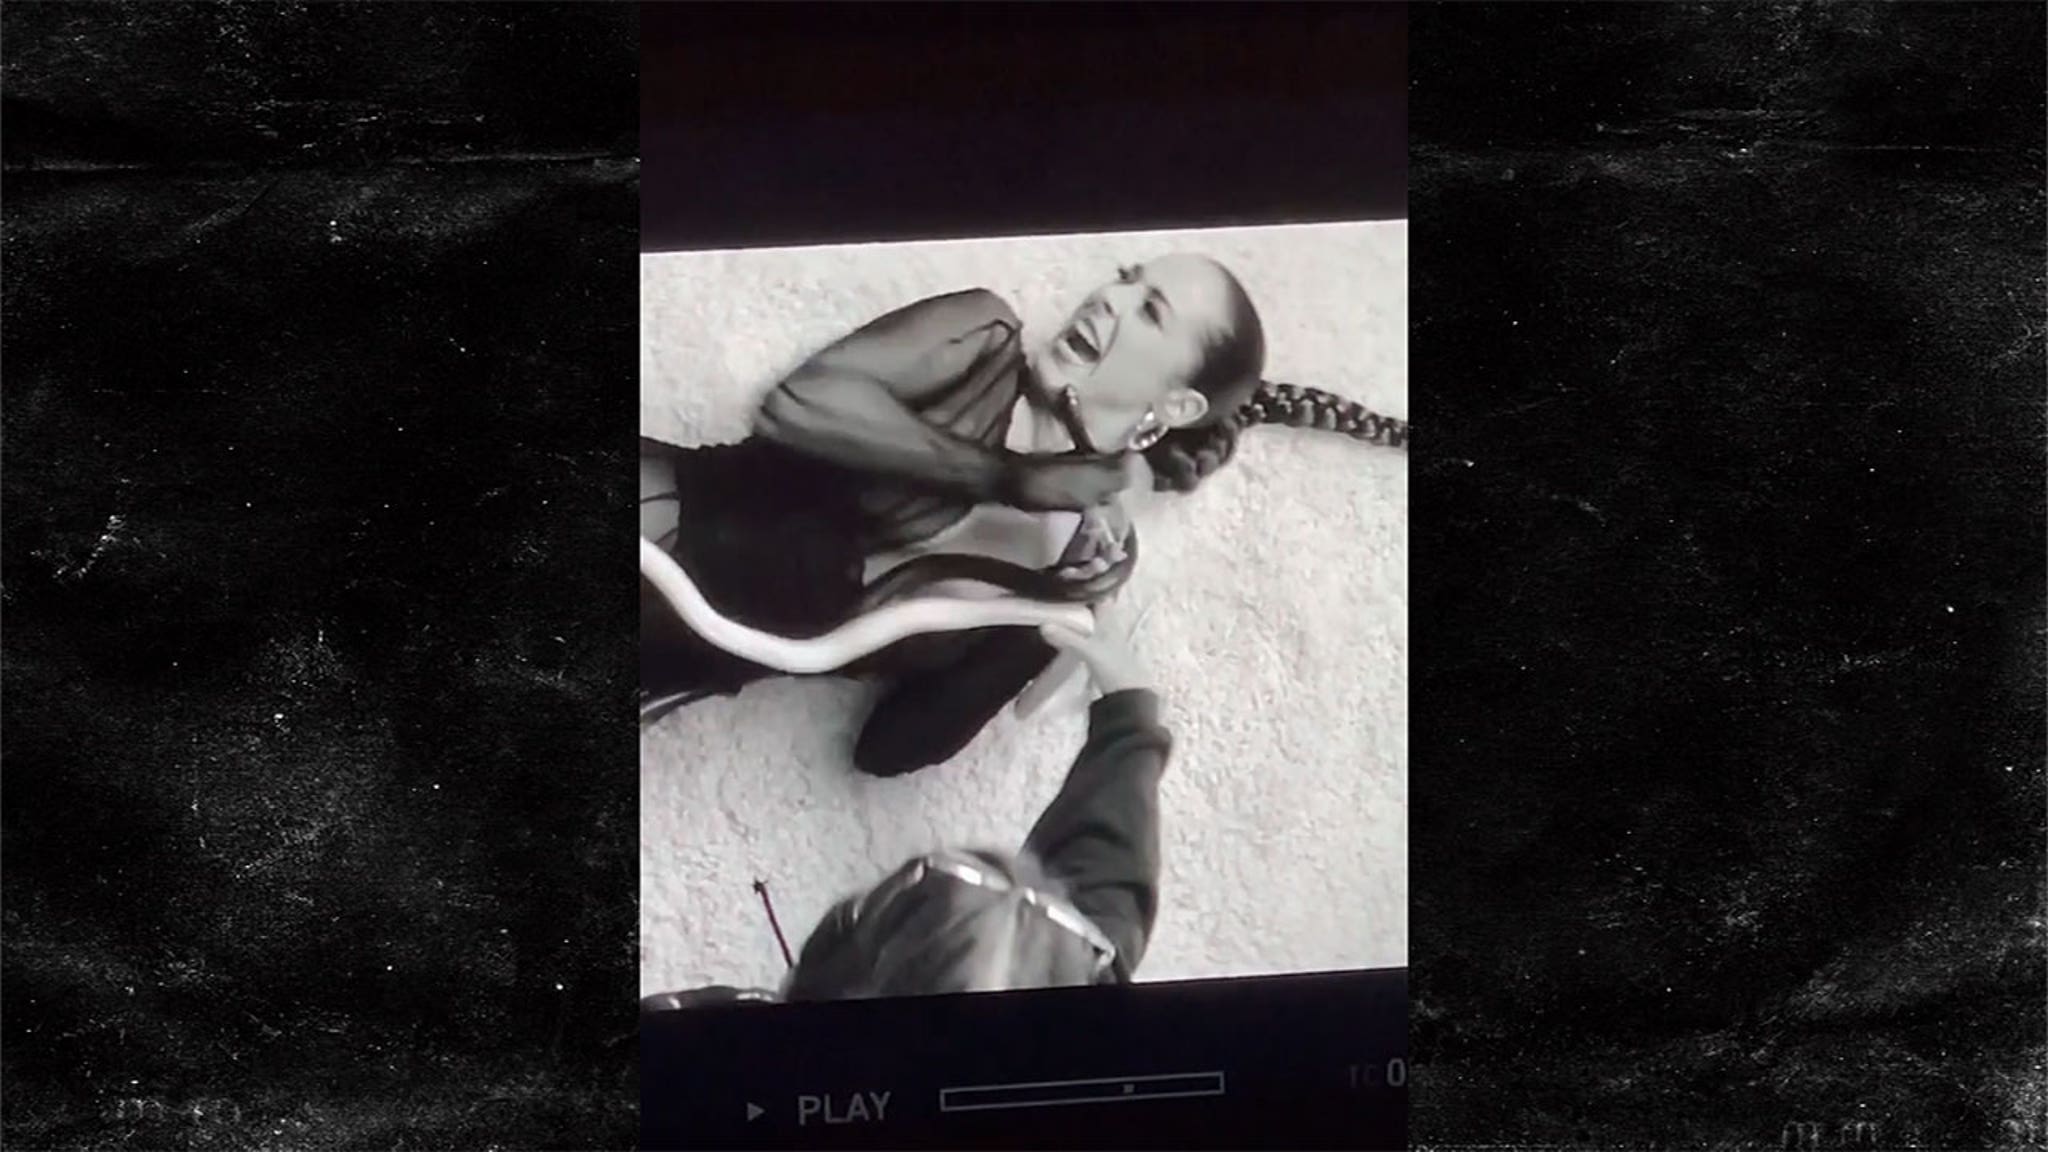 Maeta breaks down the viral snake bite during a music video shoot thumbnail